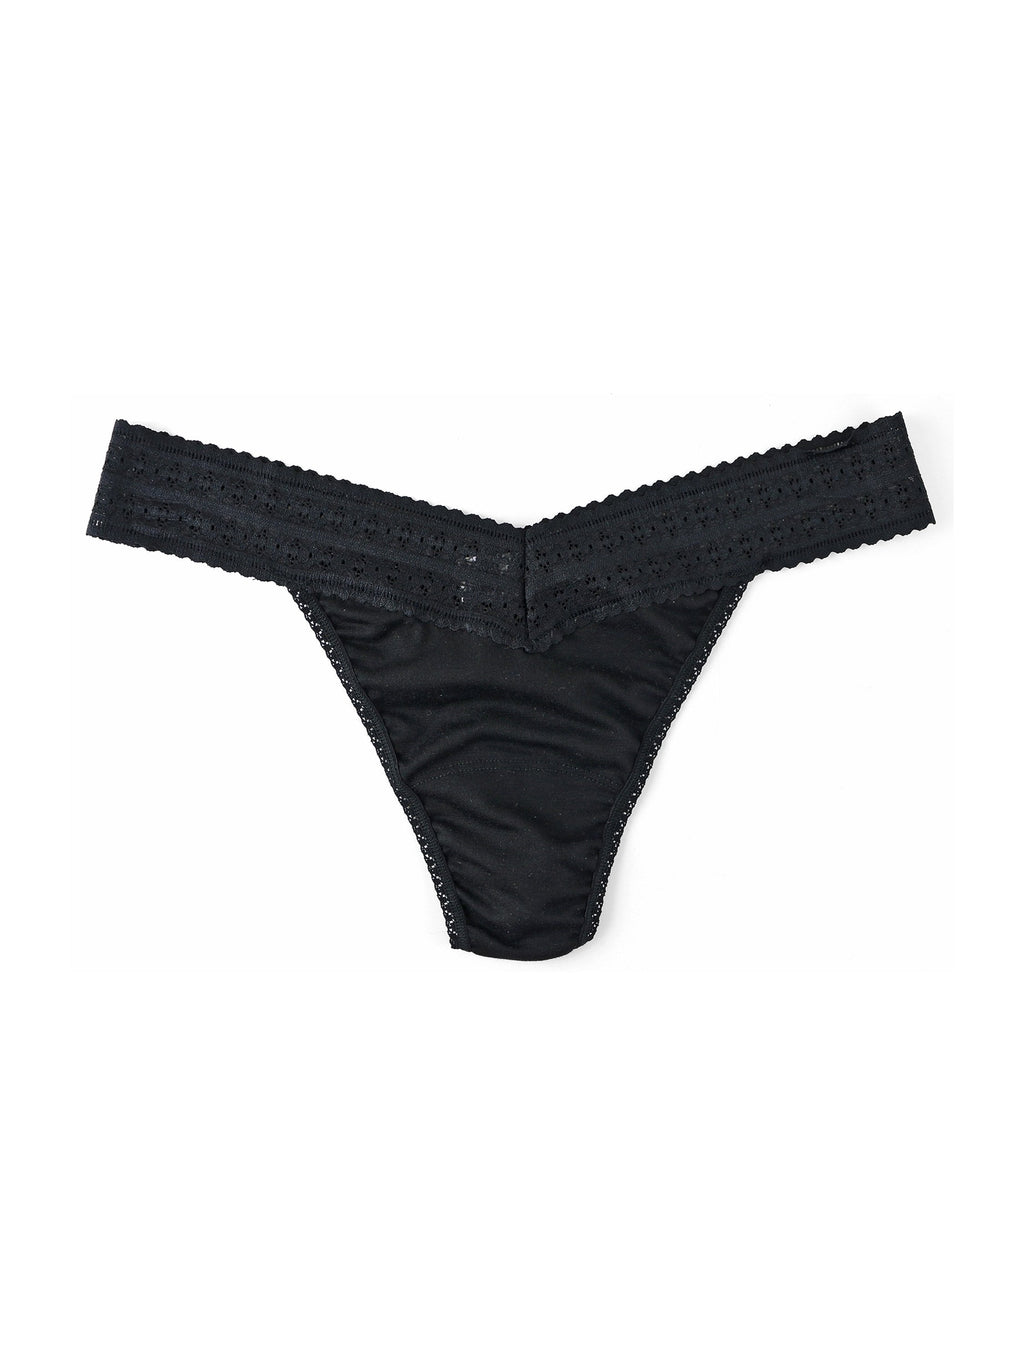 VICTORIA'S SECRET Black Cotton V-String Thong Panty S M L XL 2XL Sexy  G-String